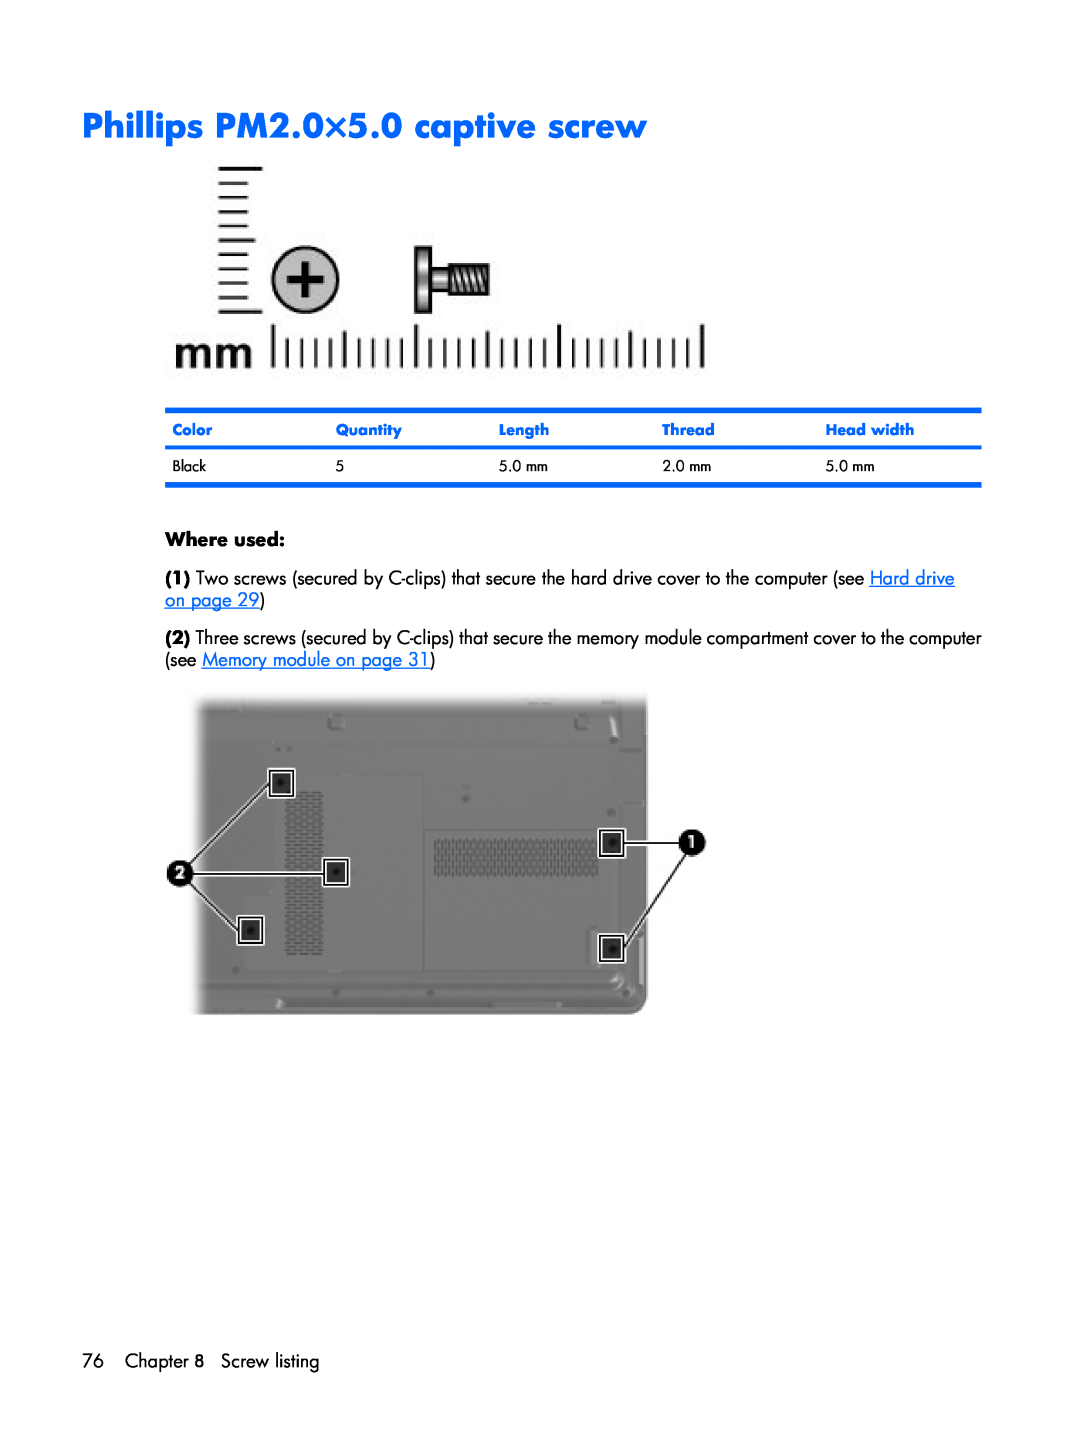 Compaq F500 manual Phillips PM2.0×5.0 captive screw, Where used 